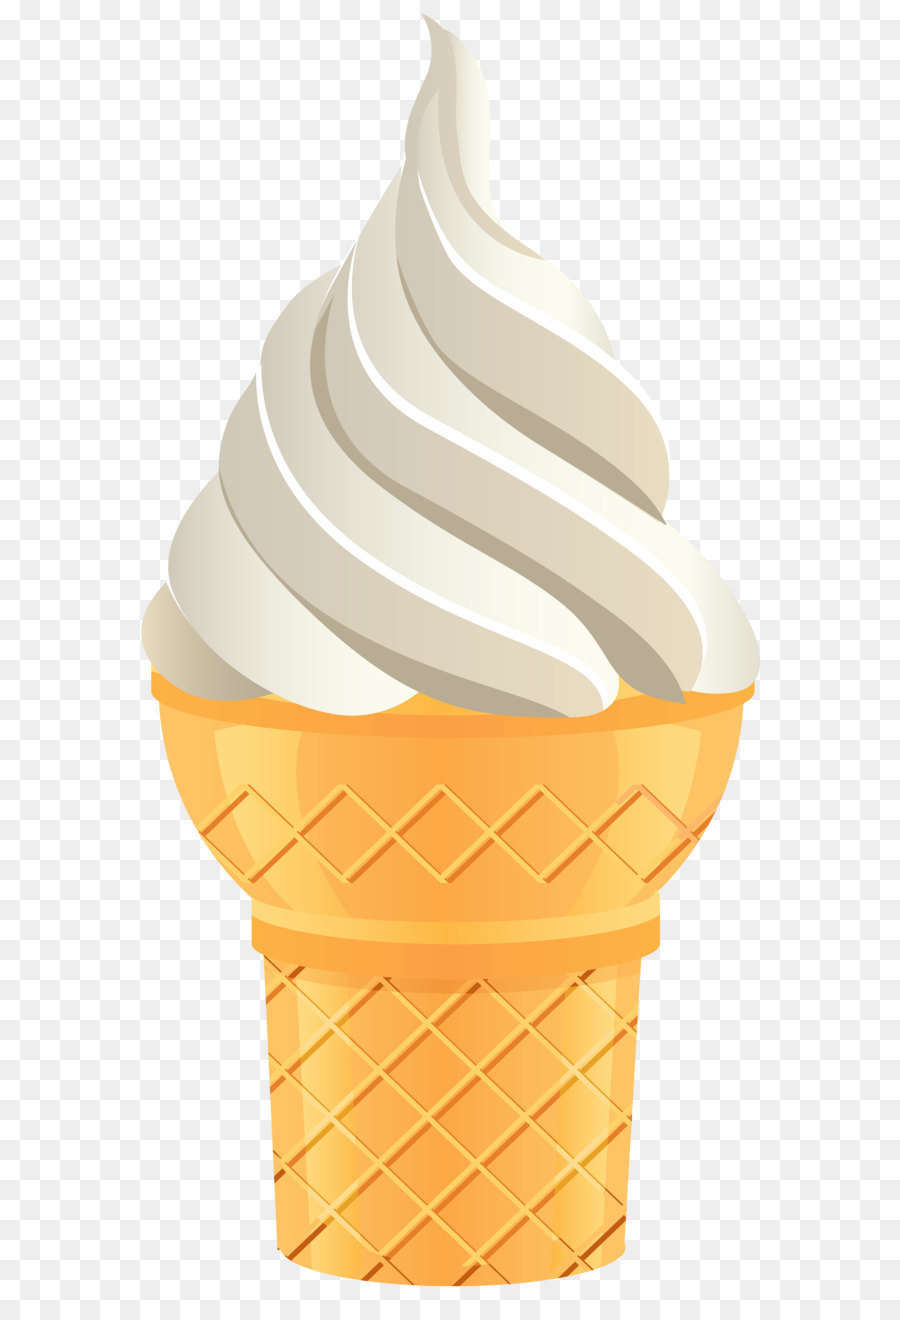 Ice cream cone Flavor Cup - Vanilla Ice Cream Cone PNG Transparent Clip Art Image png download - 3998*8000 - Free Transparent Ice Cream png Download.